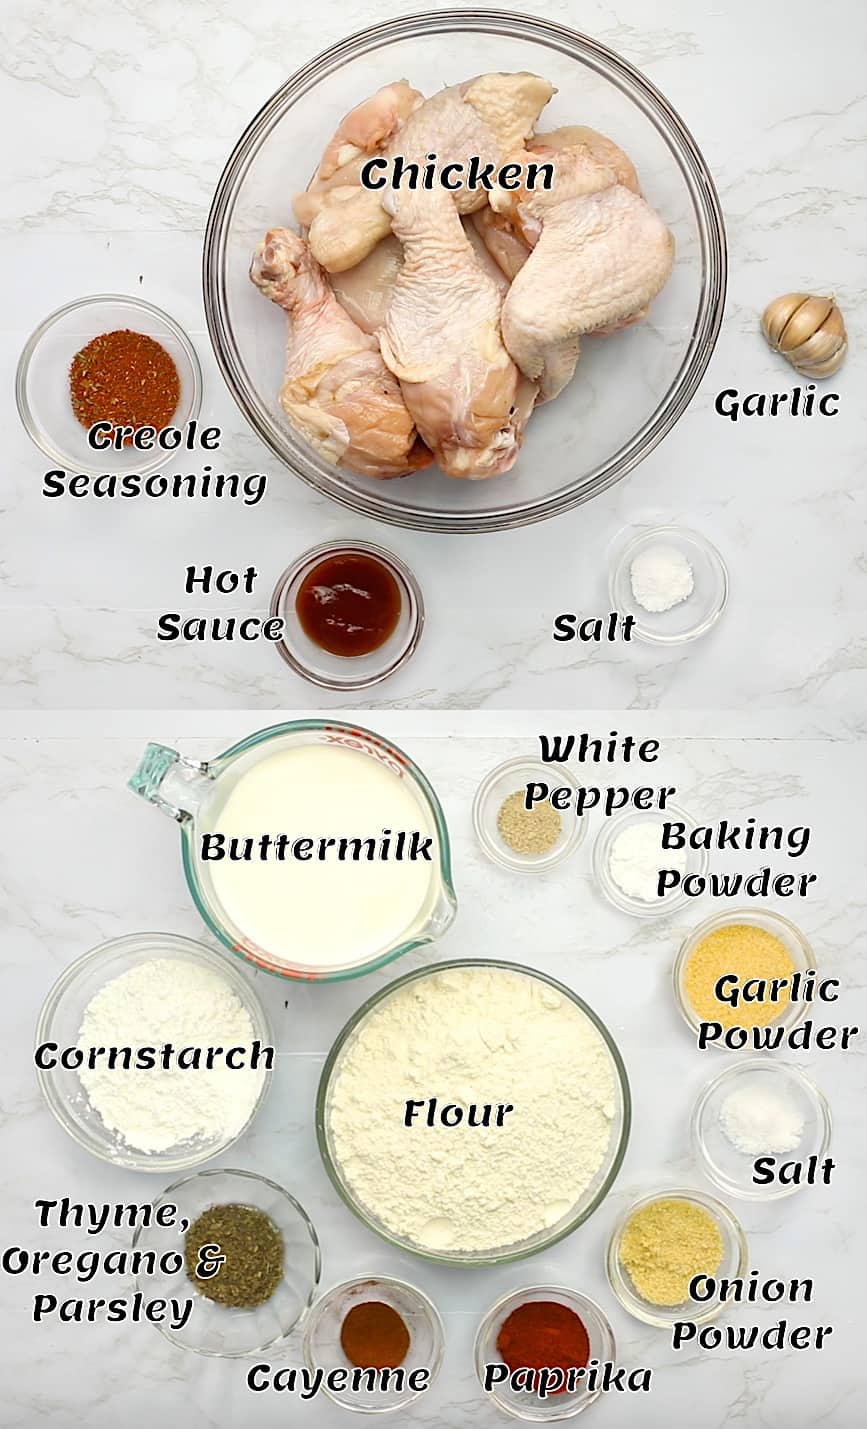 https://www.africanbites.com/wp-content/uploads/2022/10/Southern-Fried-Chicken-Ingredients.jpg